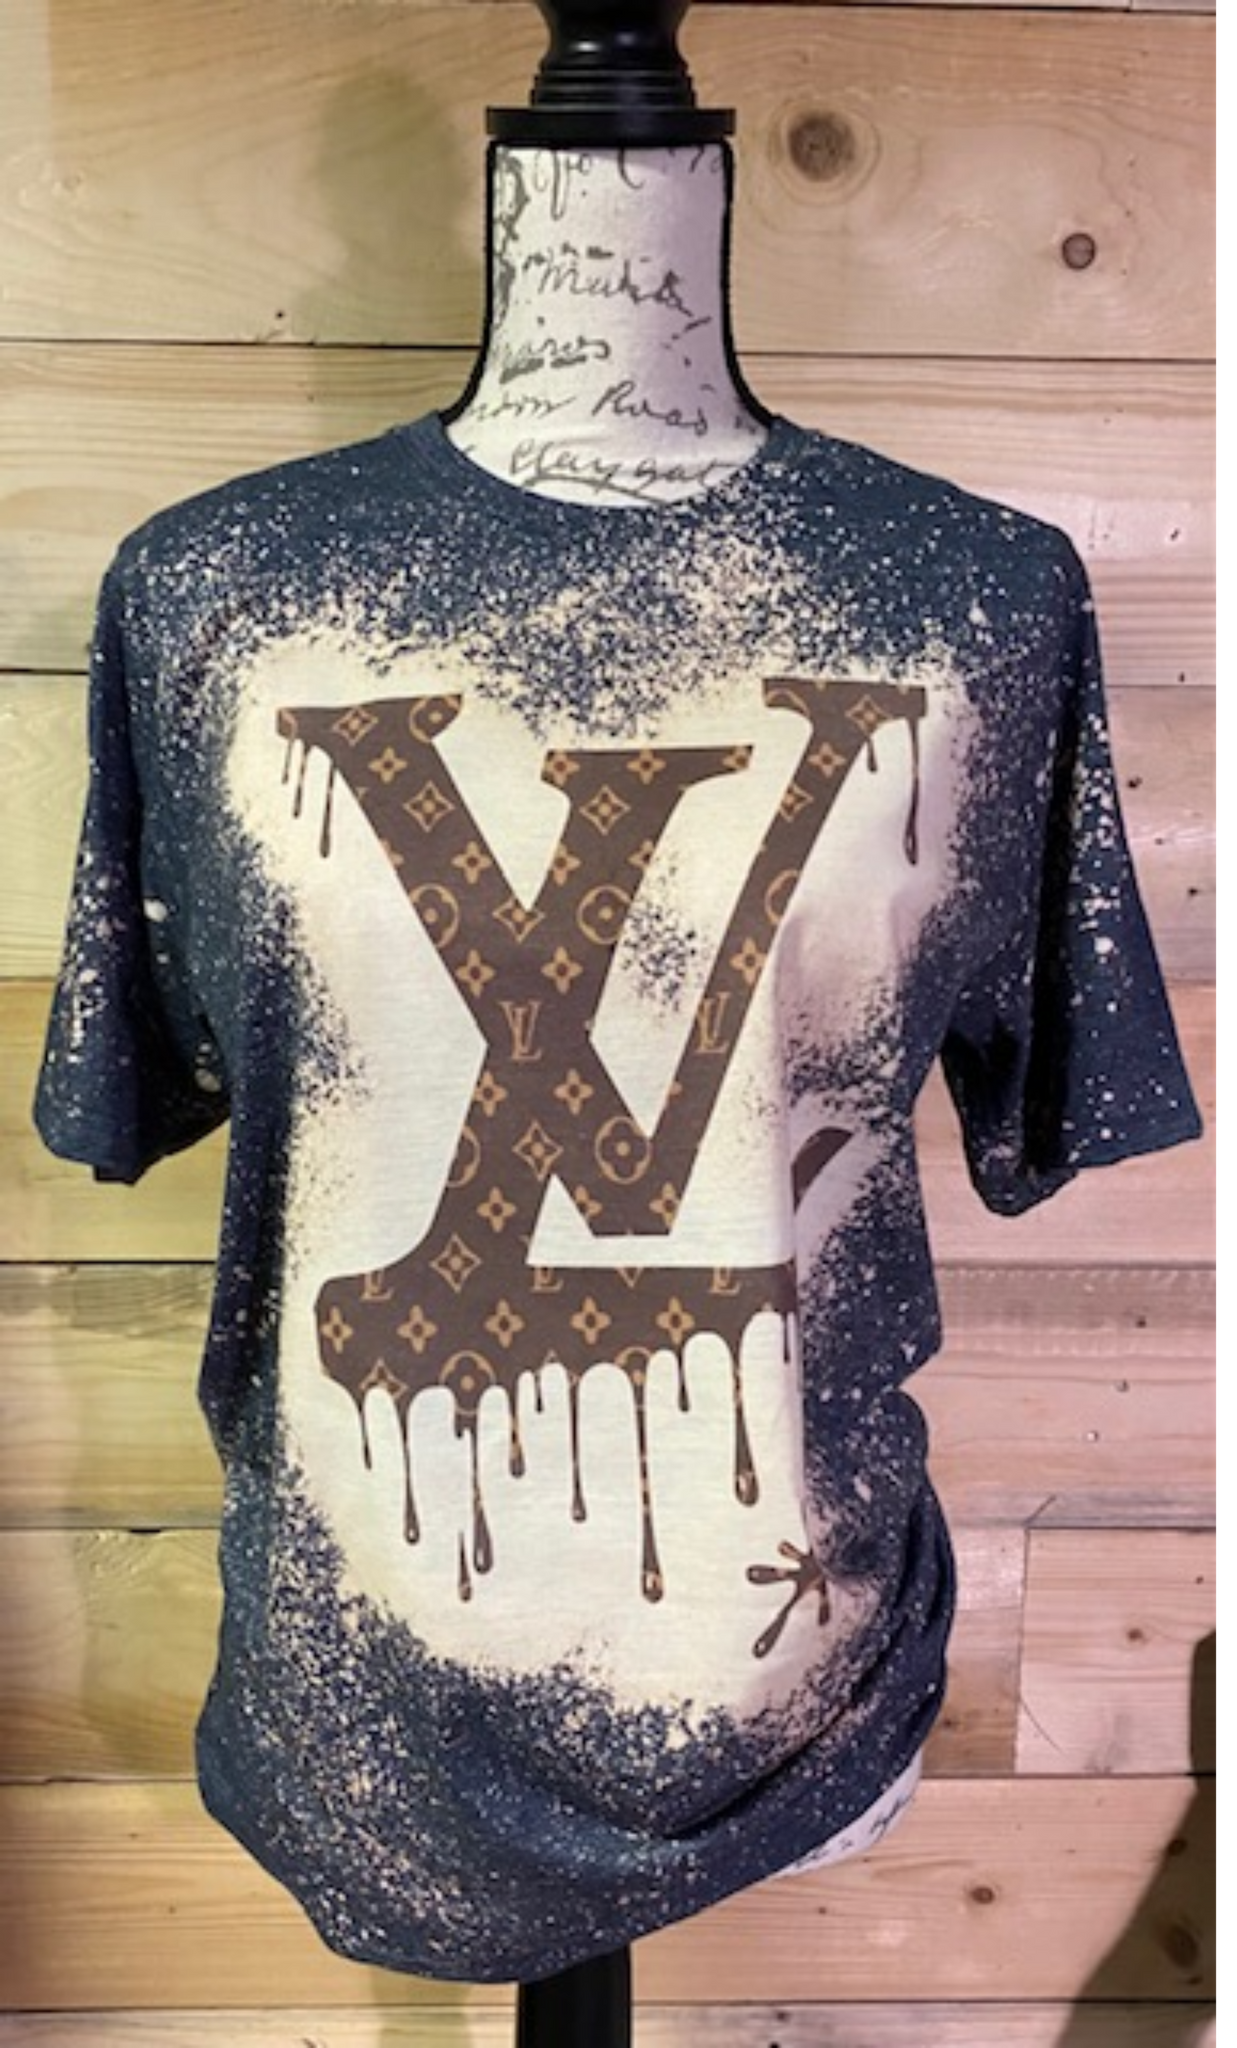 LV Drip T-Shirt